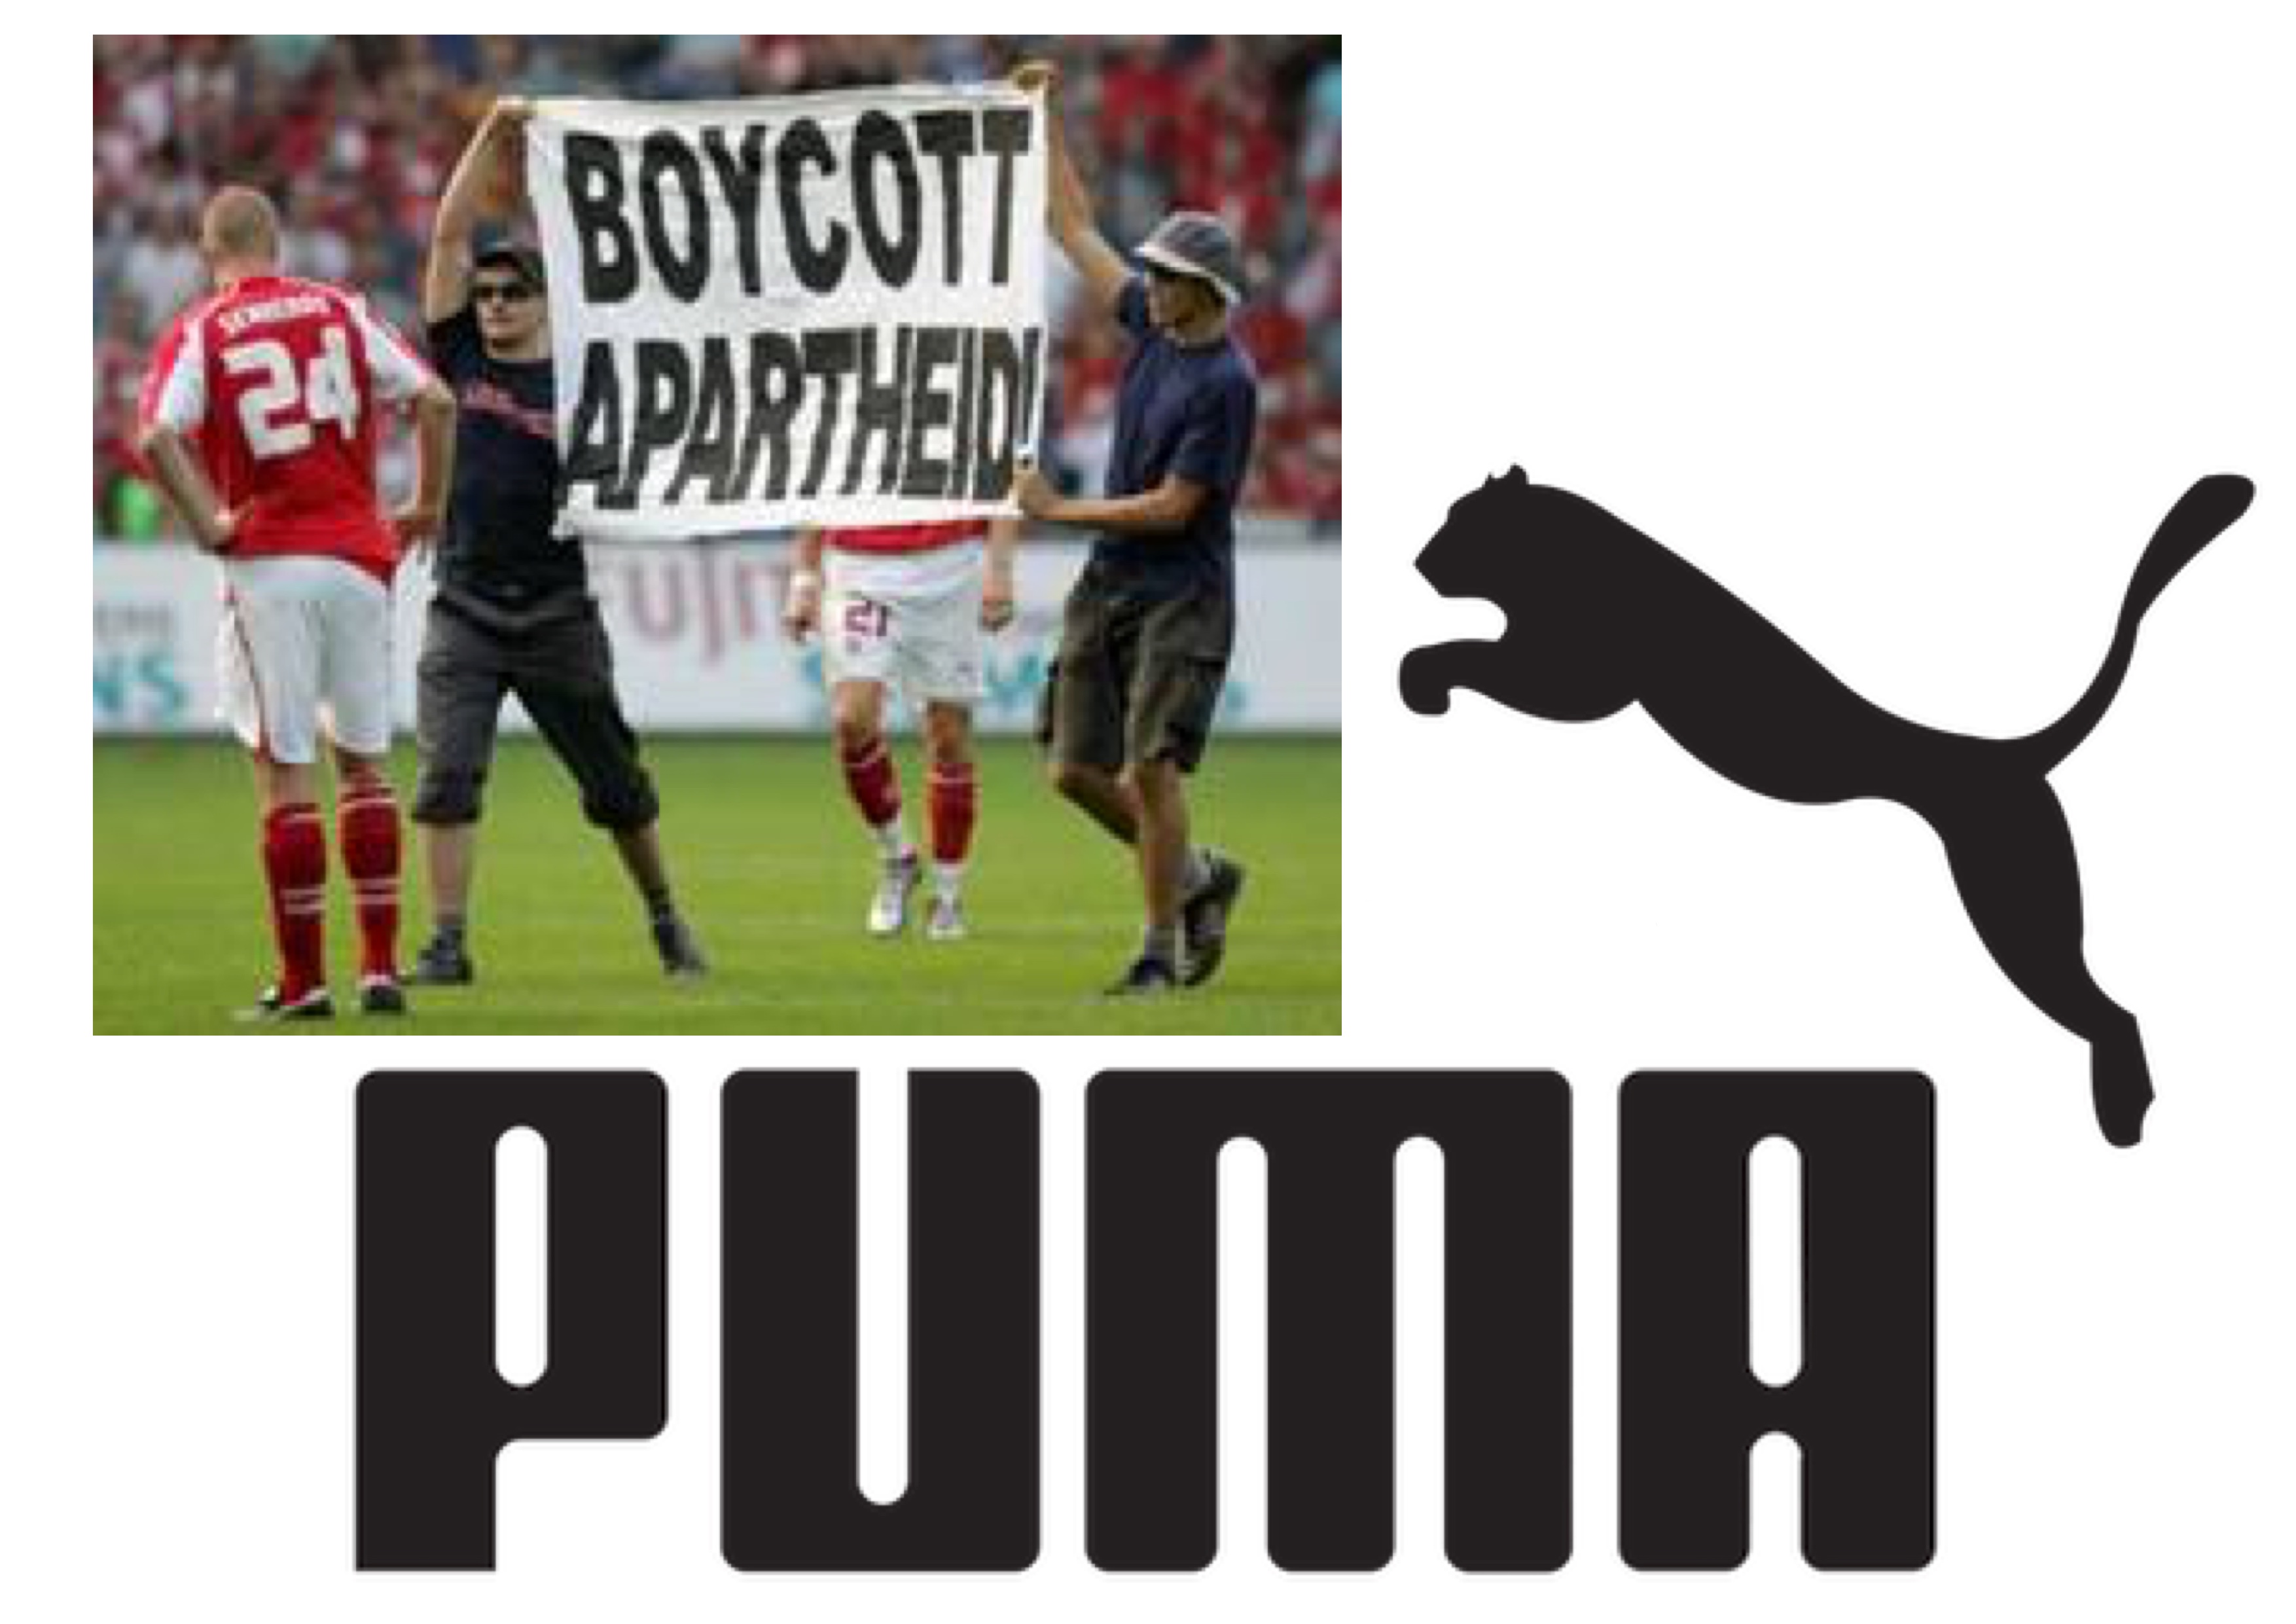 190509_puma_boycott_apartheid-2.jpg